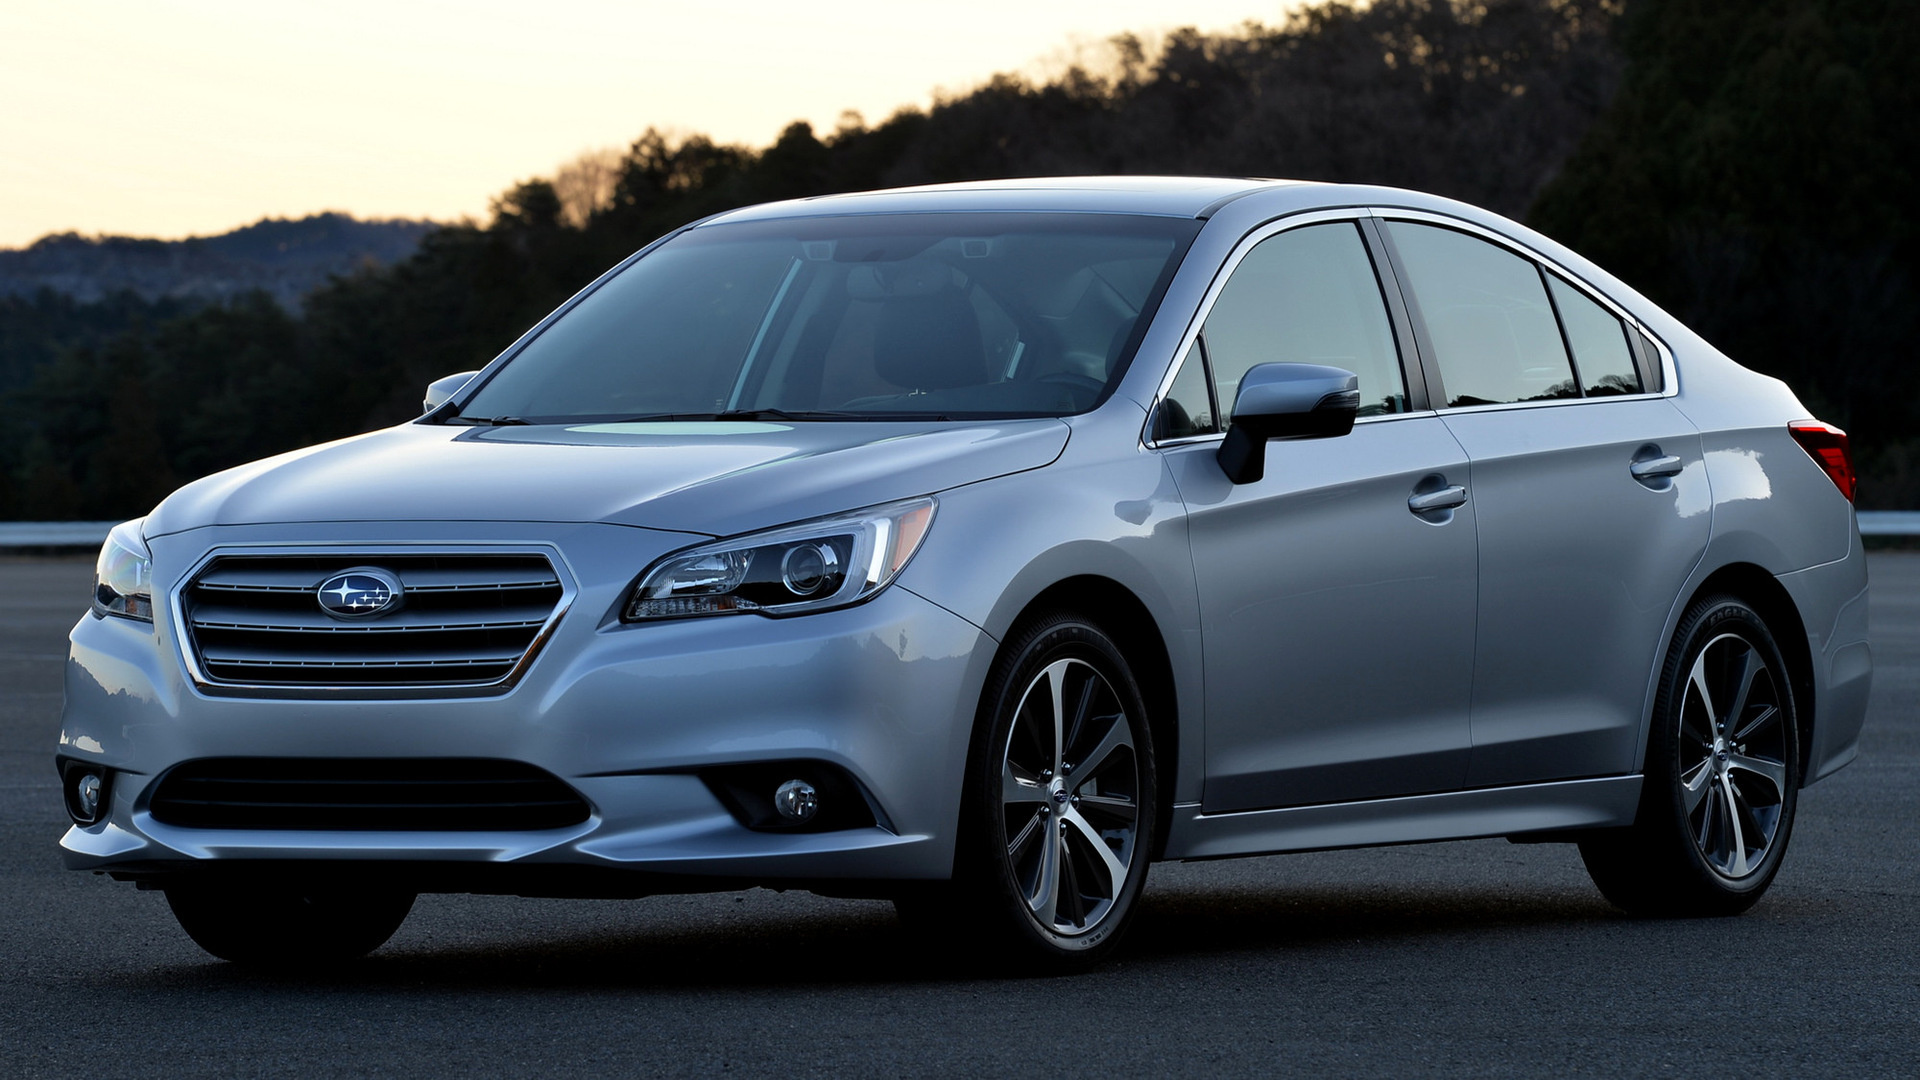 Subaru Legacy, 2015 model beauty, High-definition wallpapers, Car pixel perfection, 1920x1080 Full HD Desktop